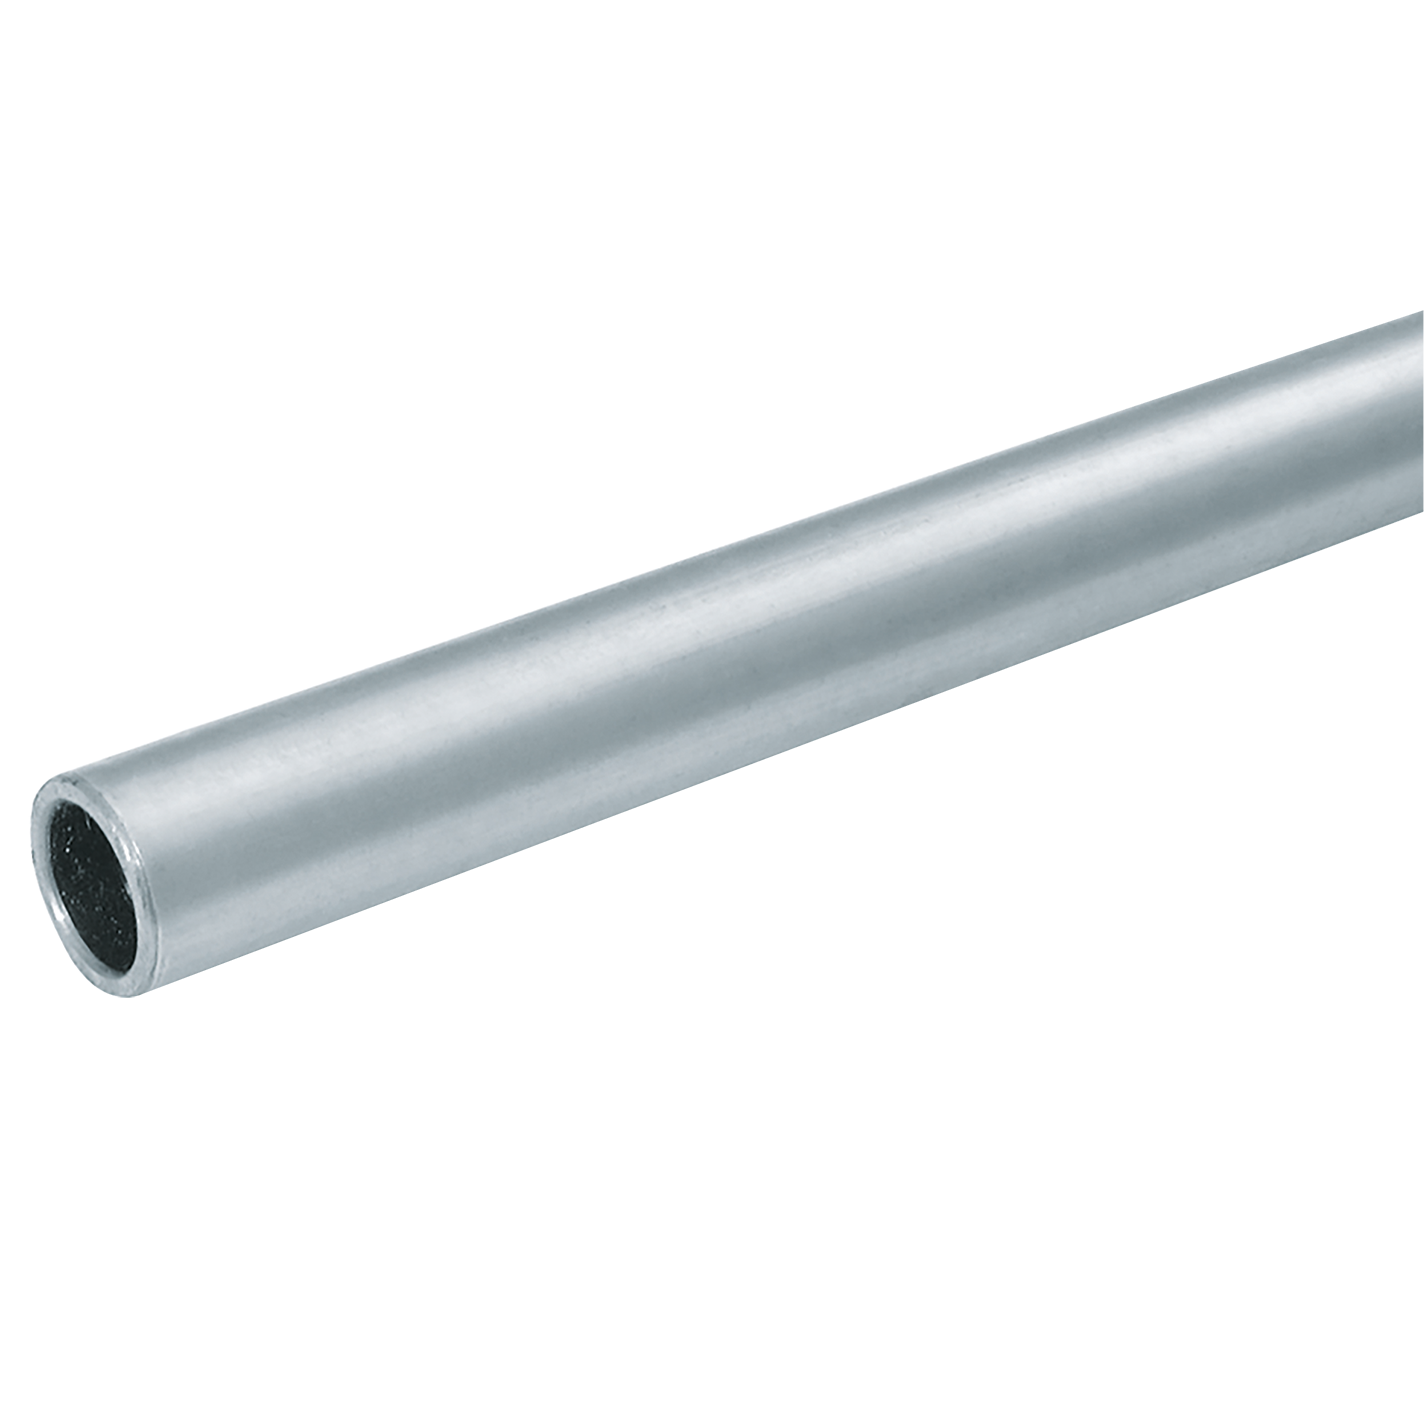 10mm Outside Diameter Hydraulic Tube